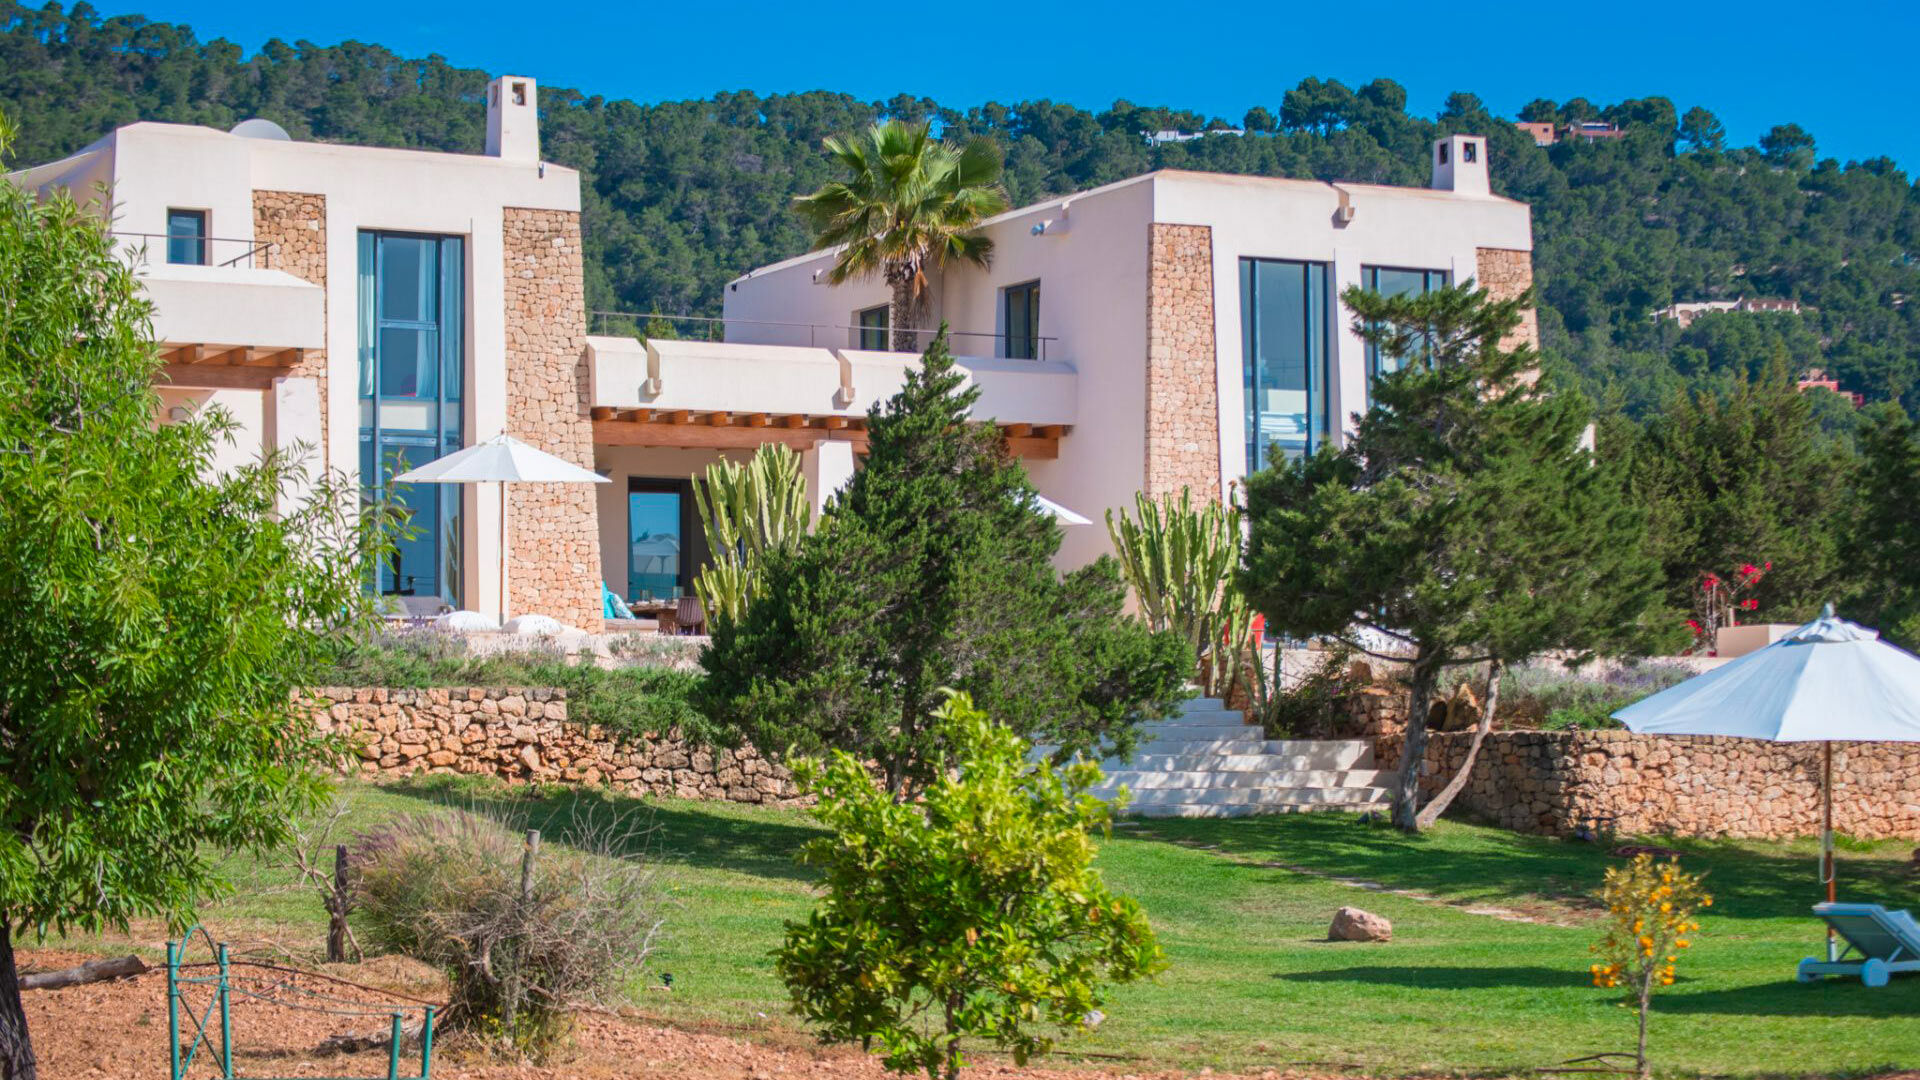 Exterior view of the Ses Boques luxury villa in Ibiza